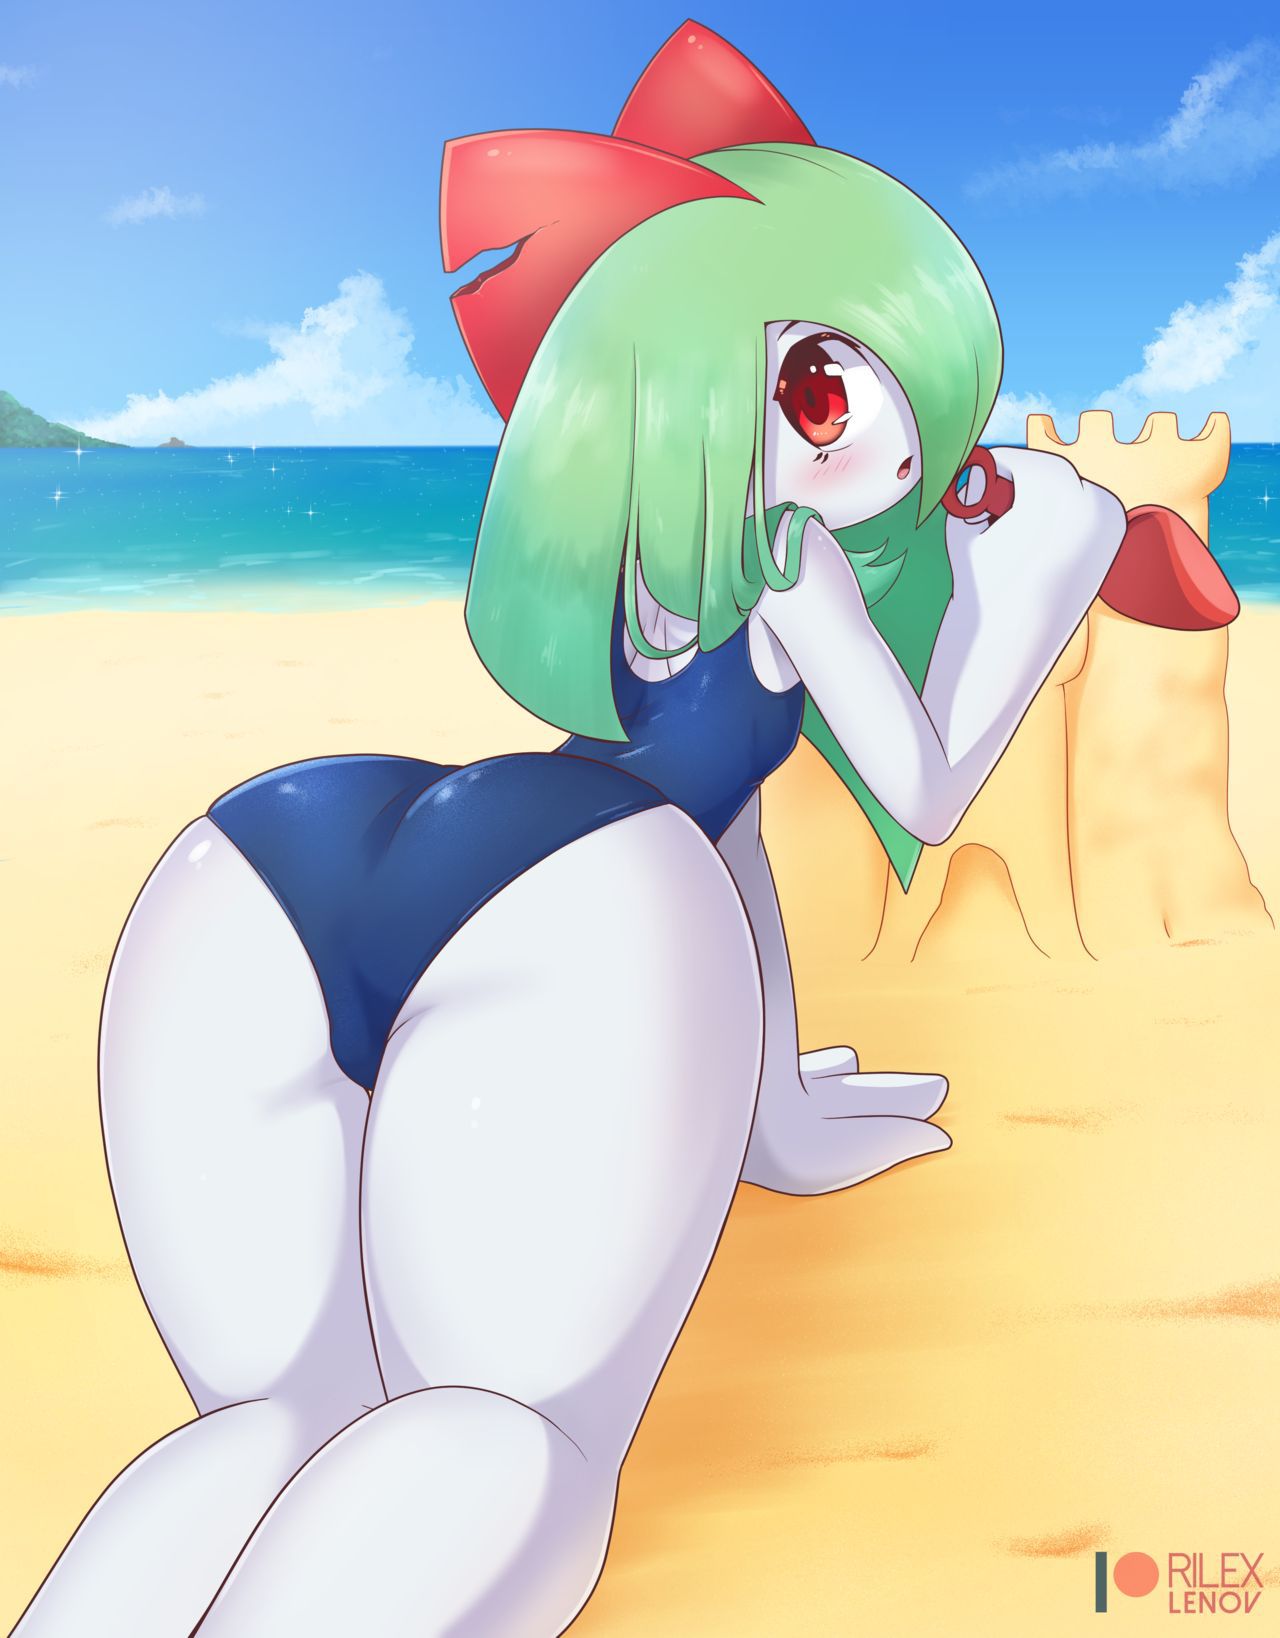 [Rilex Lenov] Pokemon Summer Vacation 3